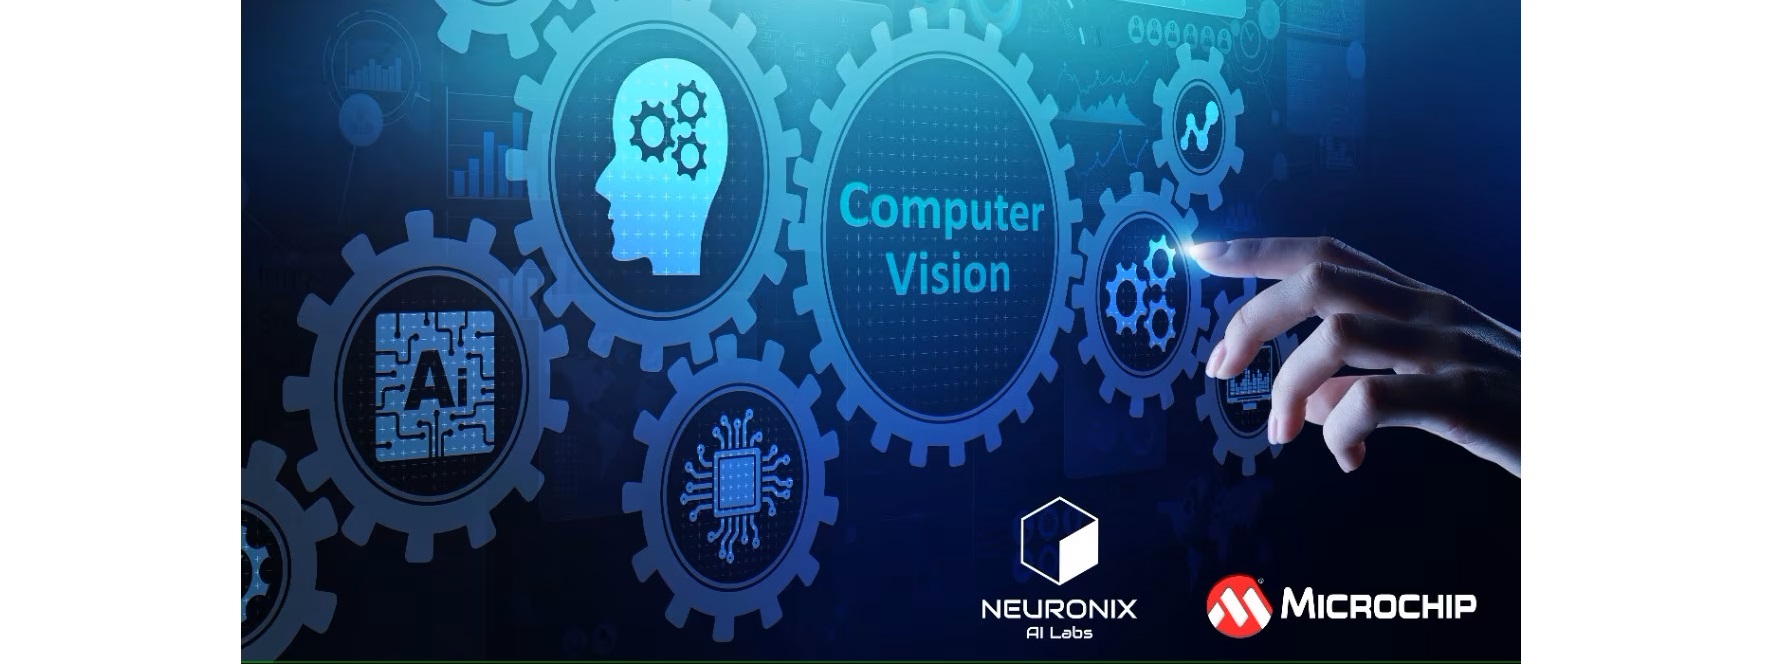 Microchip acquires Neuronix AI labs for AI edge solutions